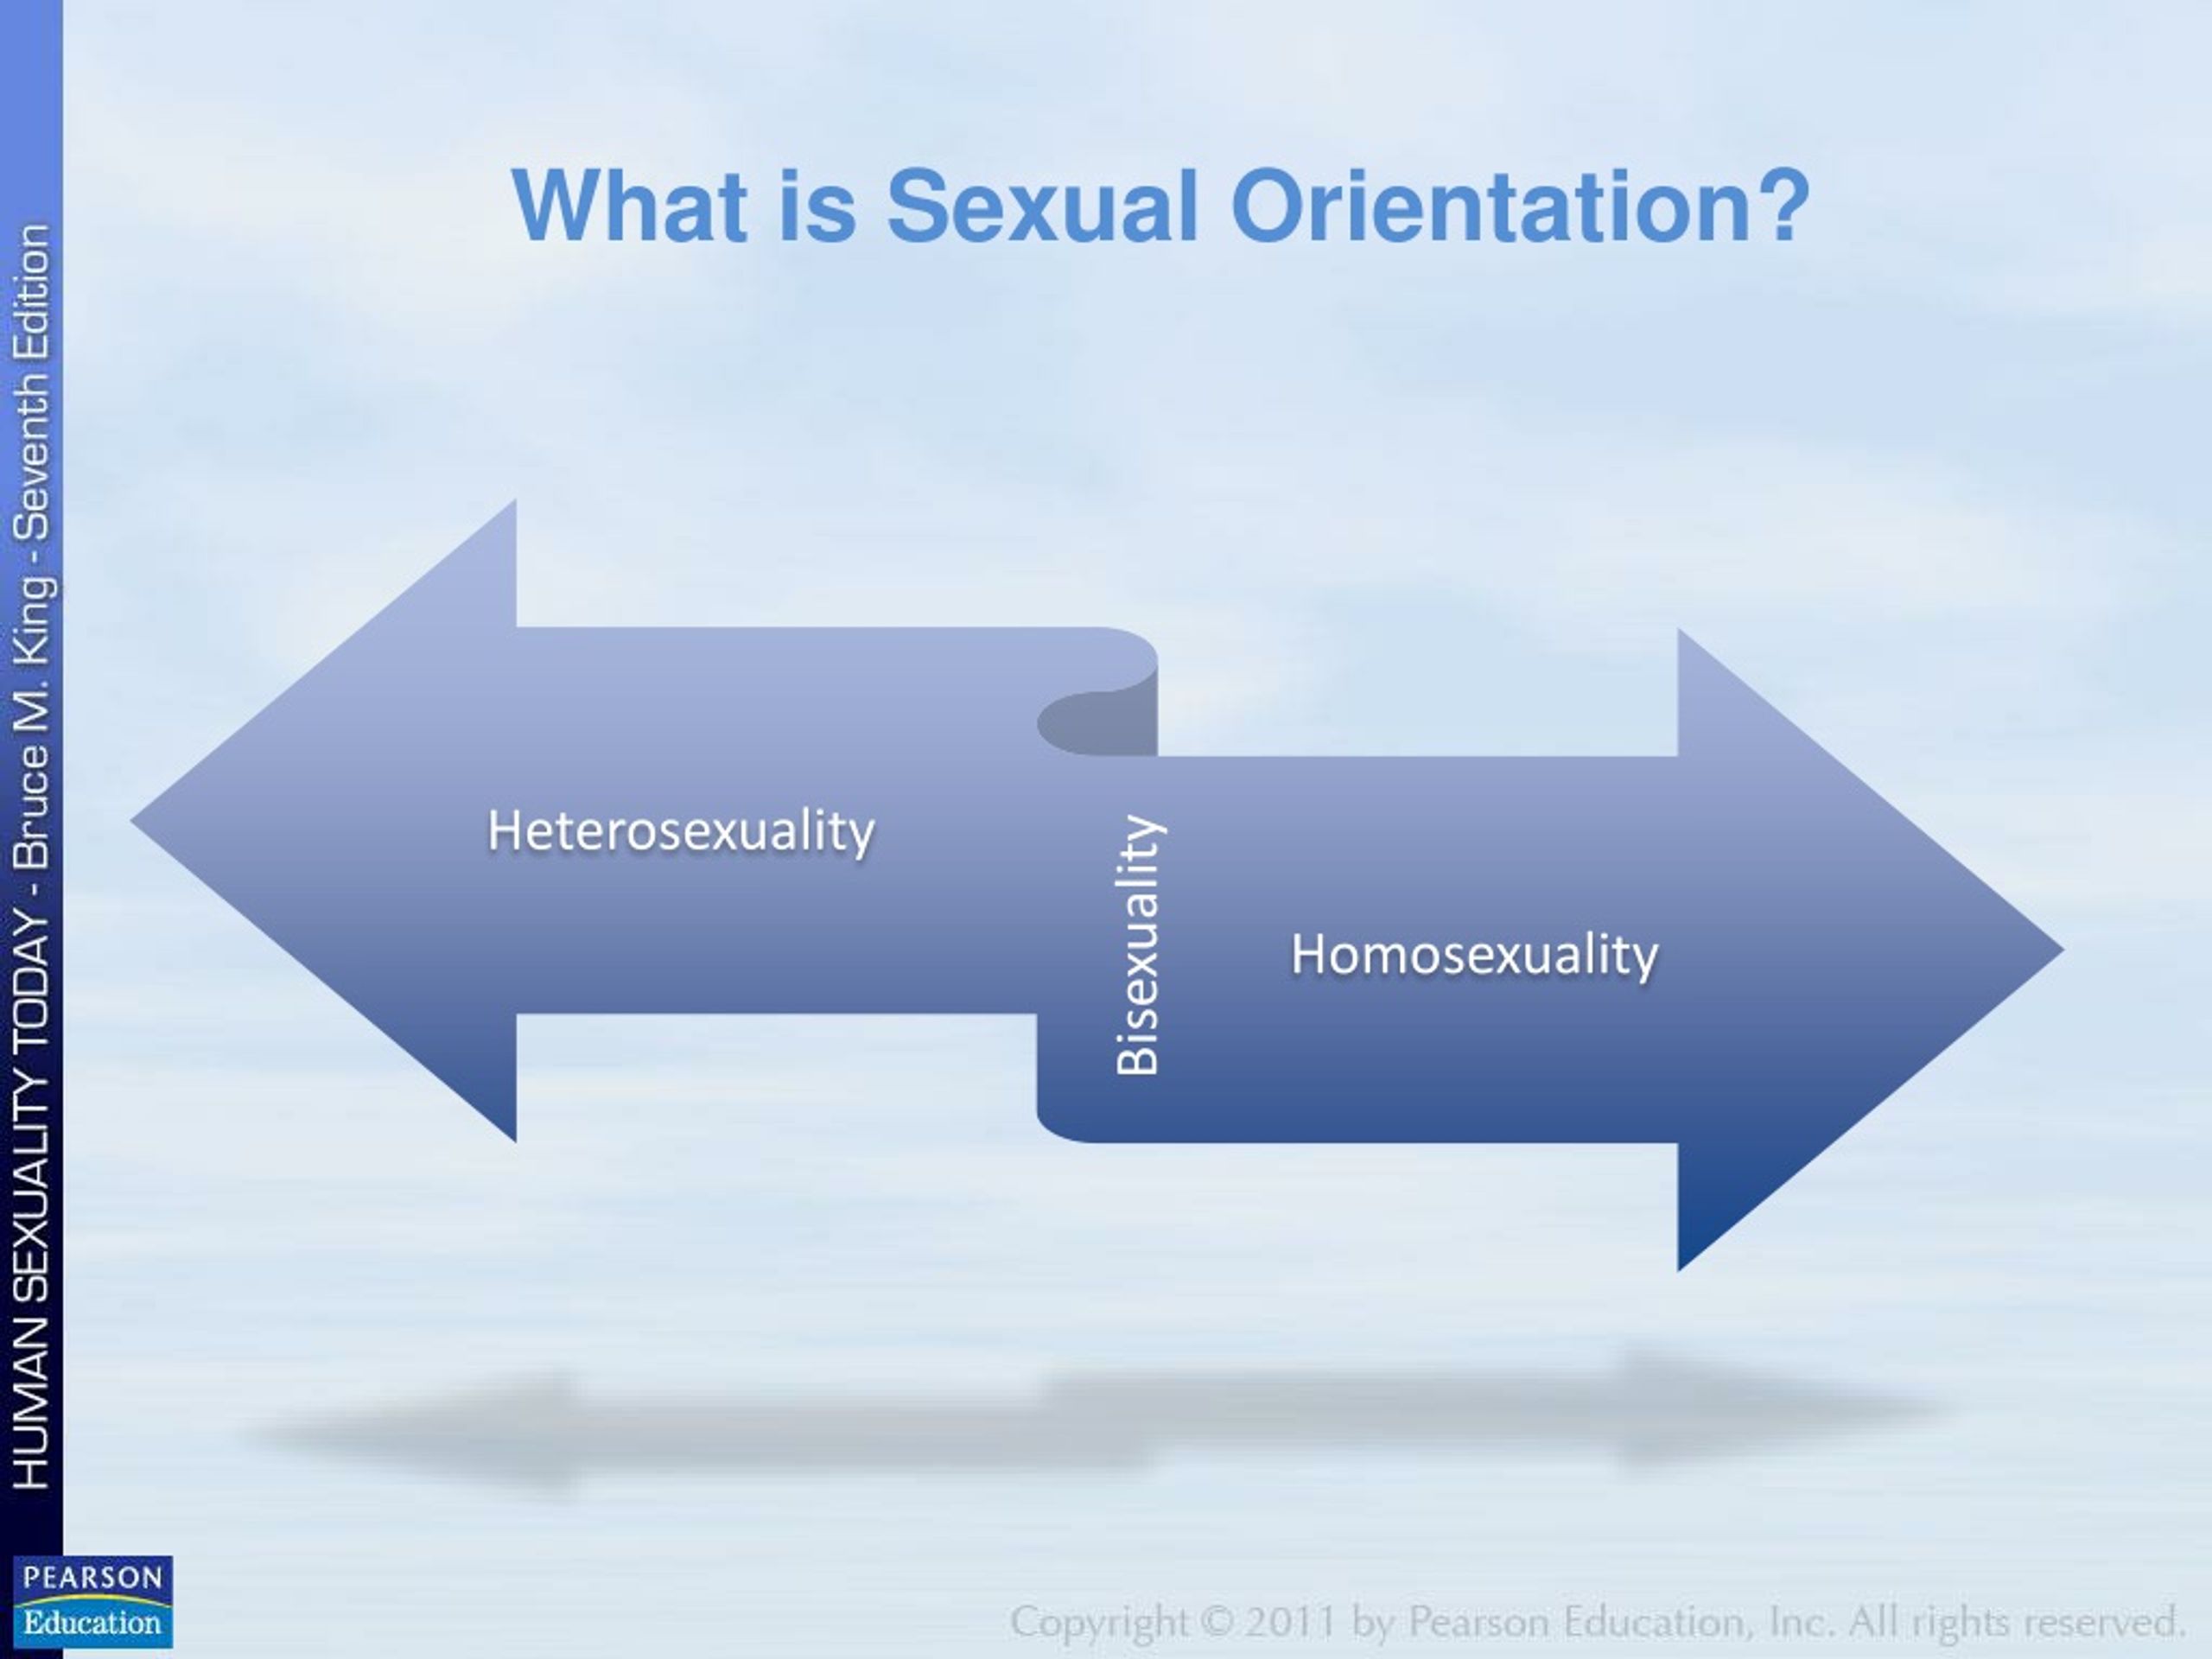 Alternative Sexual Orientation